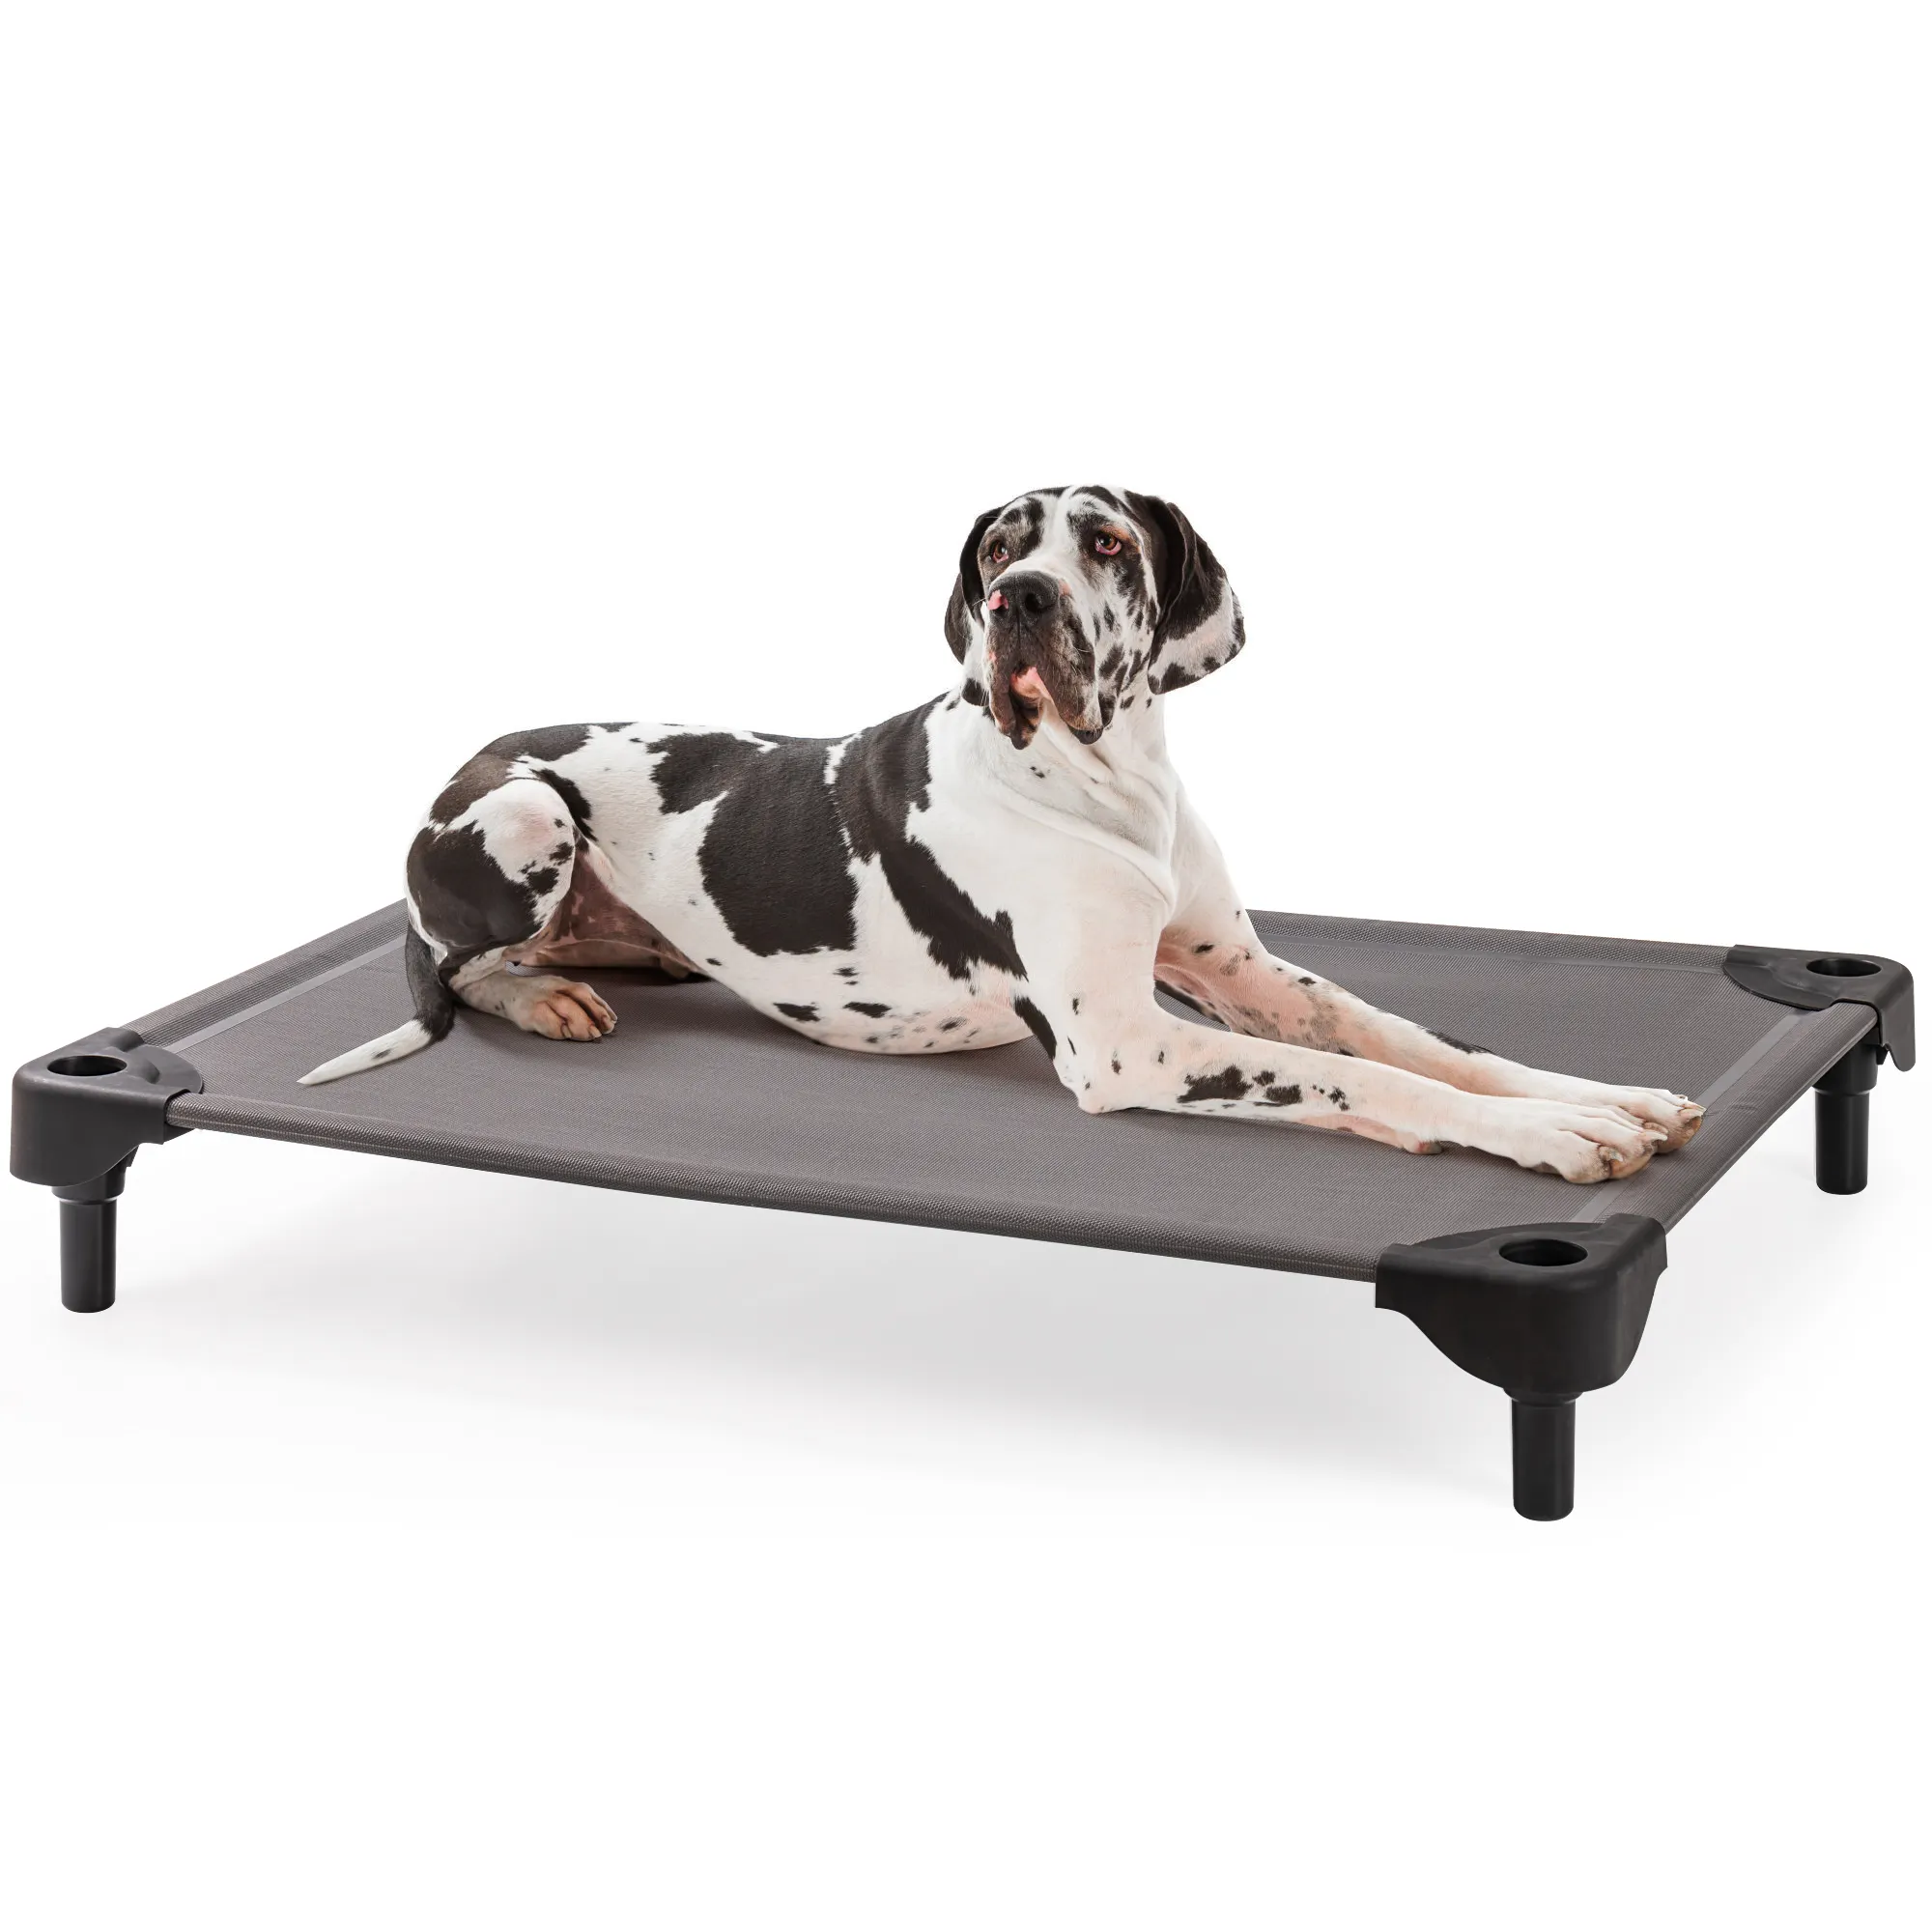 MewooFun Summer Cooling rialzato letto per cani all'aperto letto per cani rialzato portatile per cani